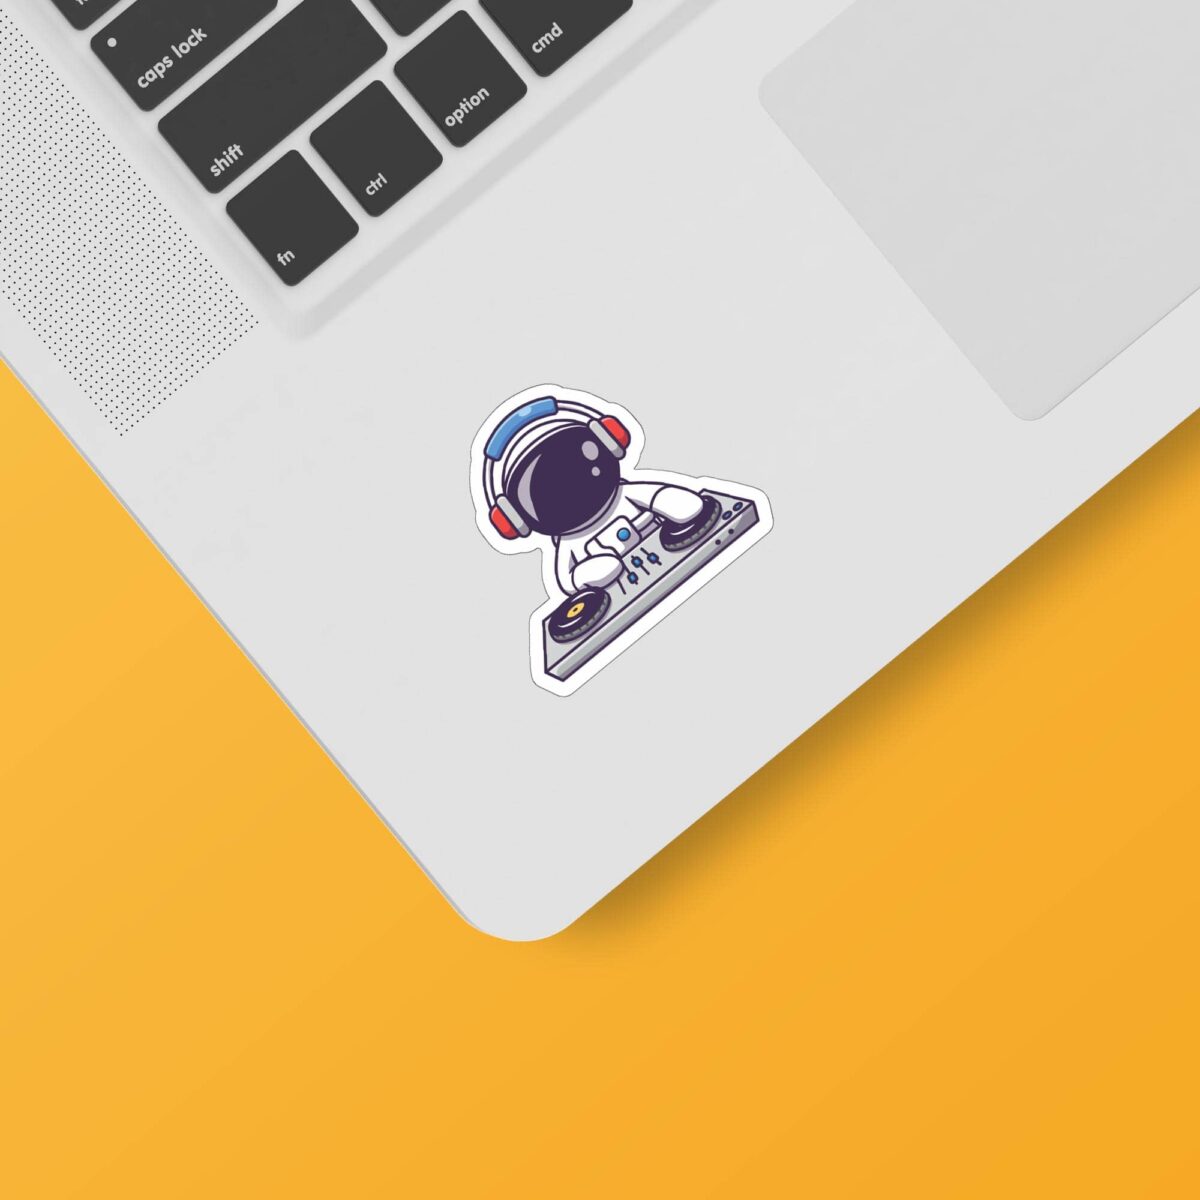 Astronaut Code 12 laptop skin with keyboard sticker